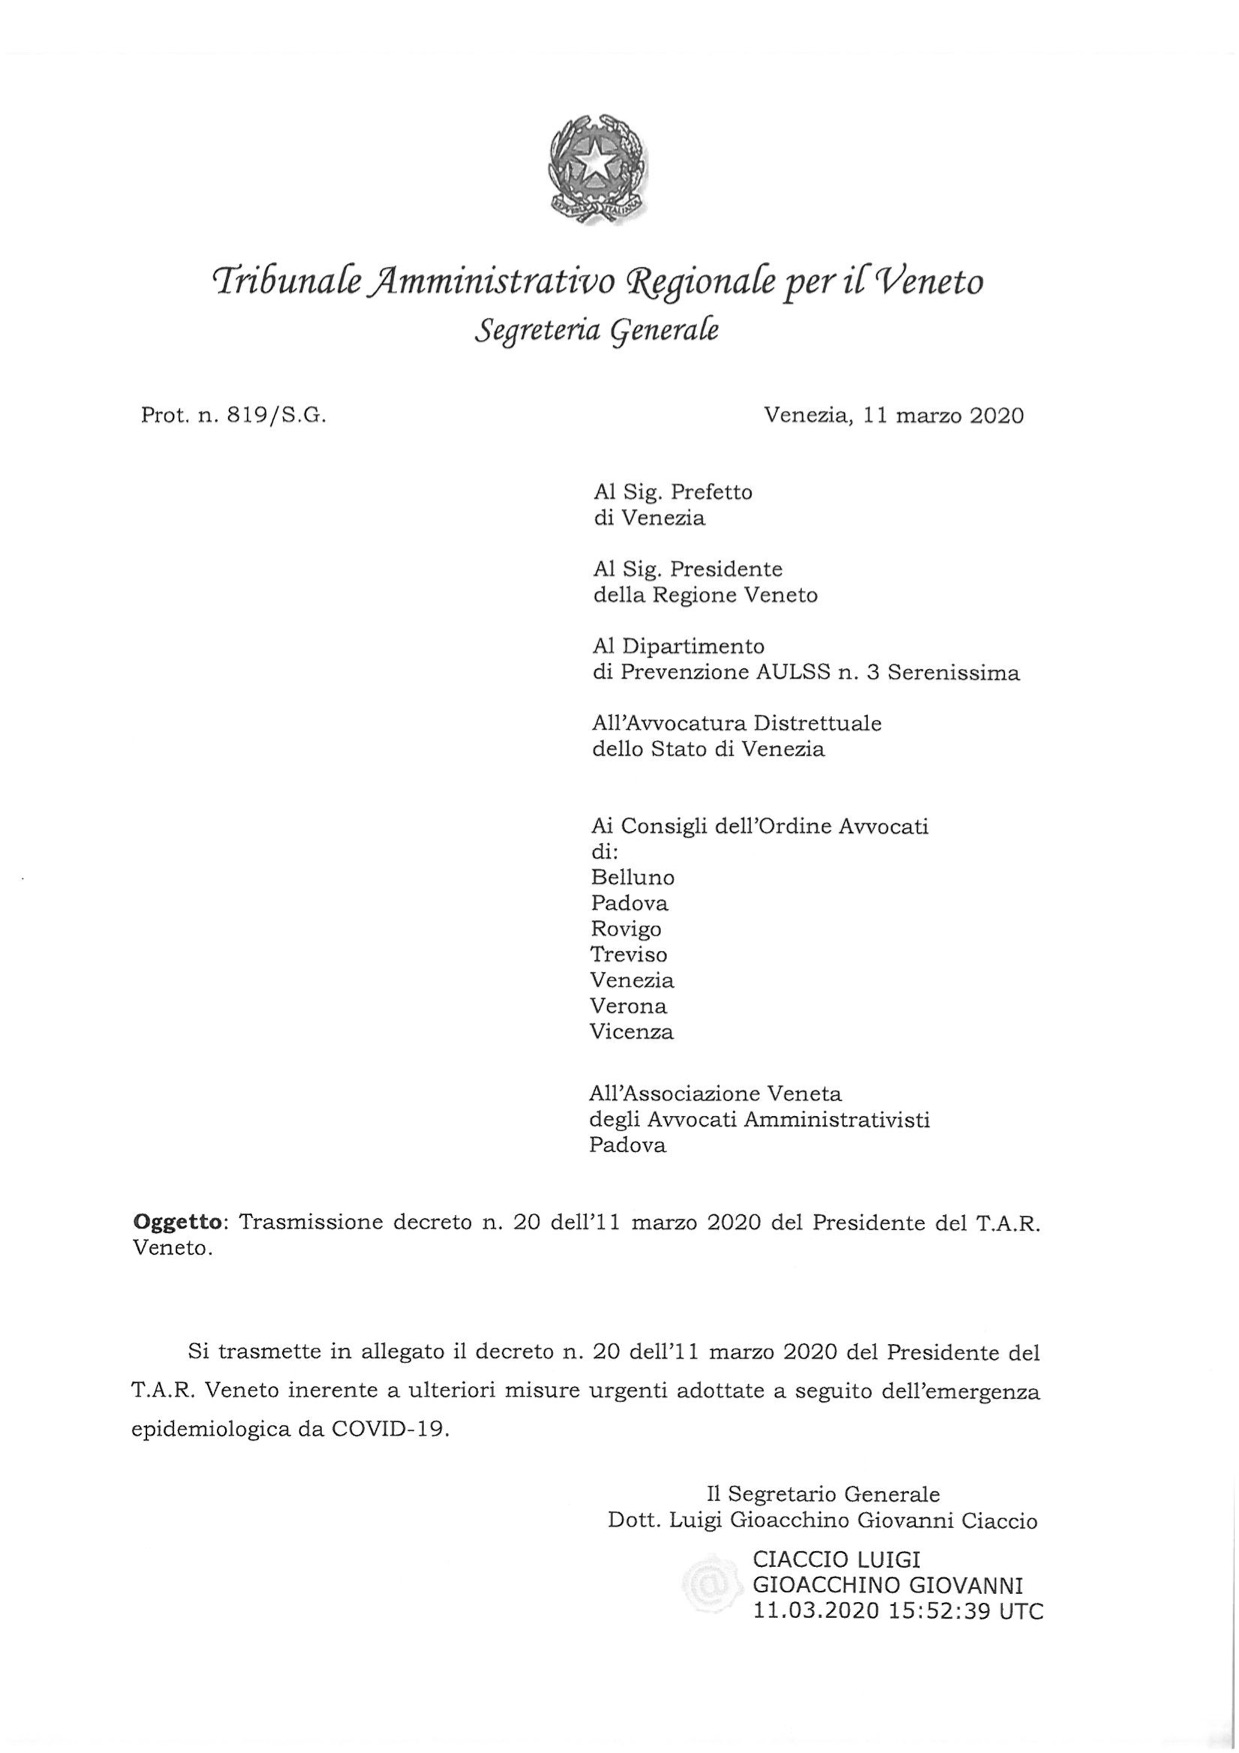 Decreto n. 20 11.03.2020 del Presidente TAR Veneto